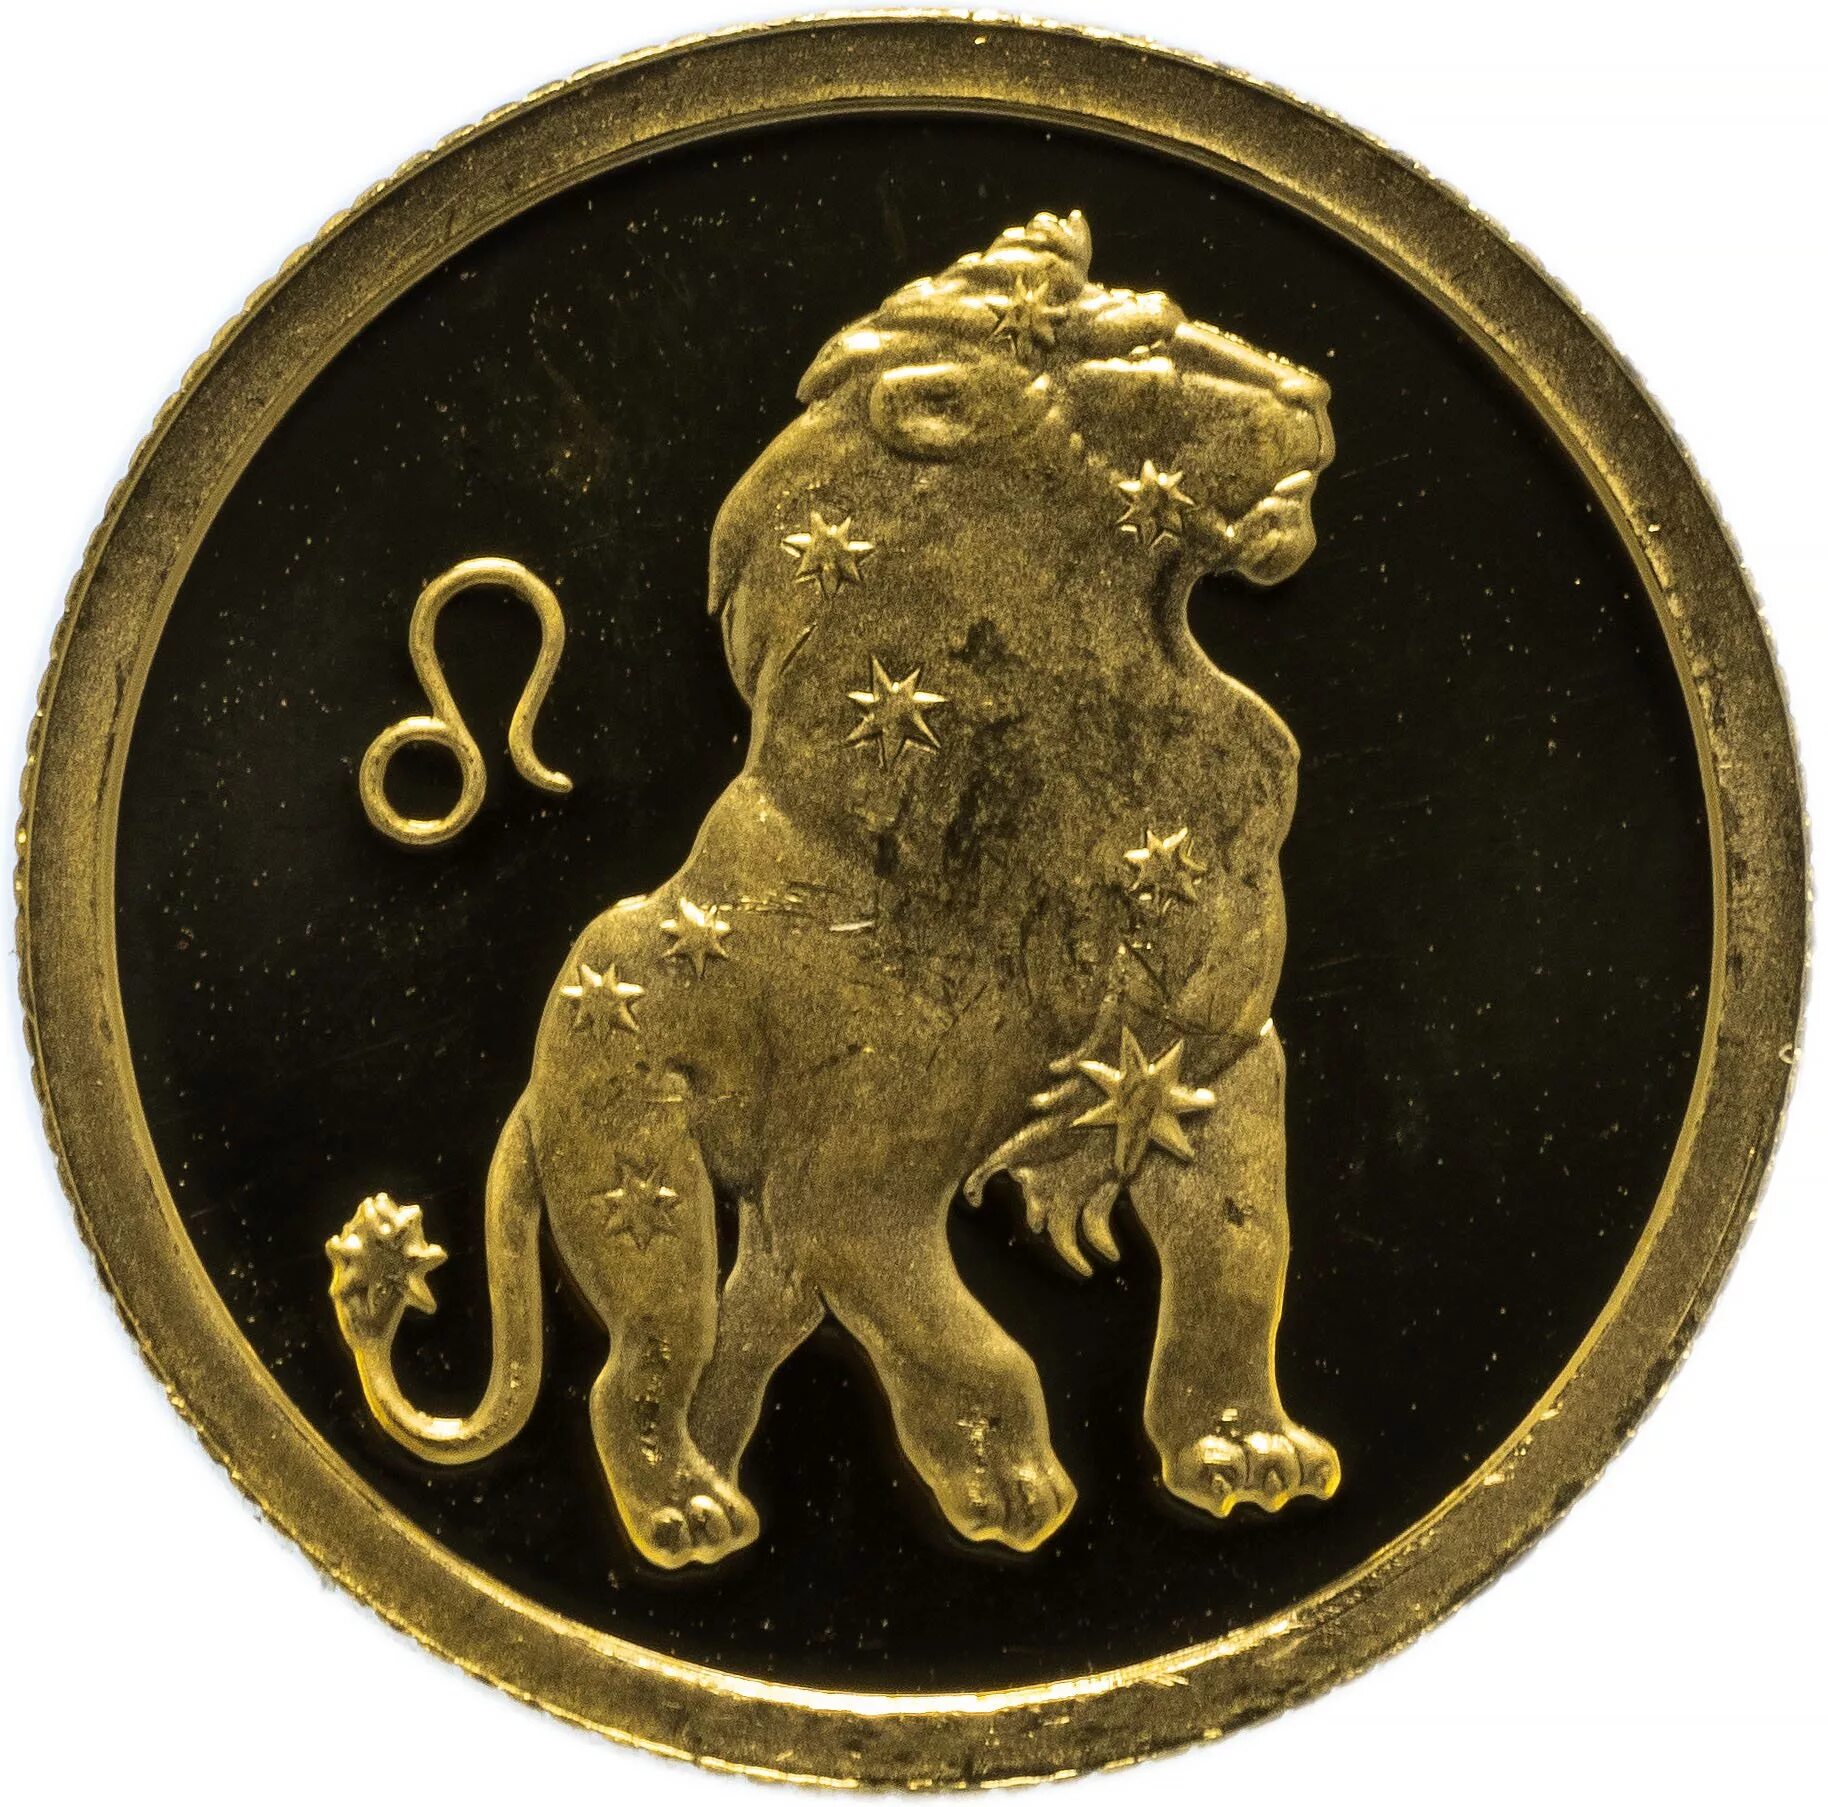 Монета знак зодиака Лев. Золотая монета Лев знак зодиака. Монета со знаком зодиака. Монеты знаки зодиака золото.